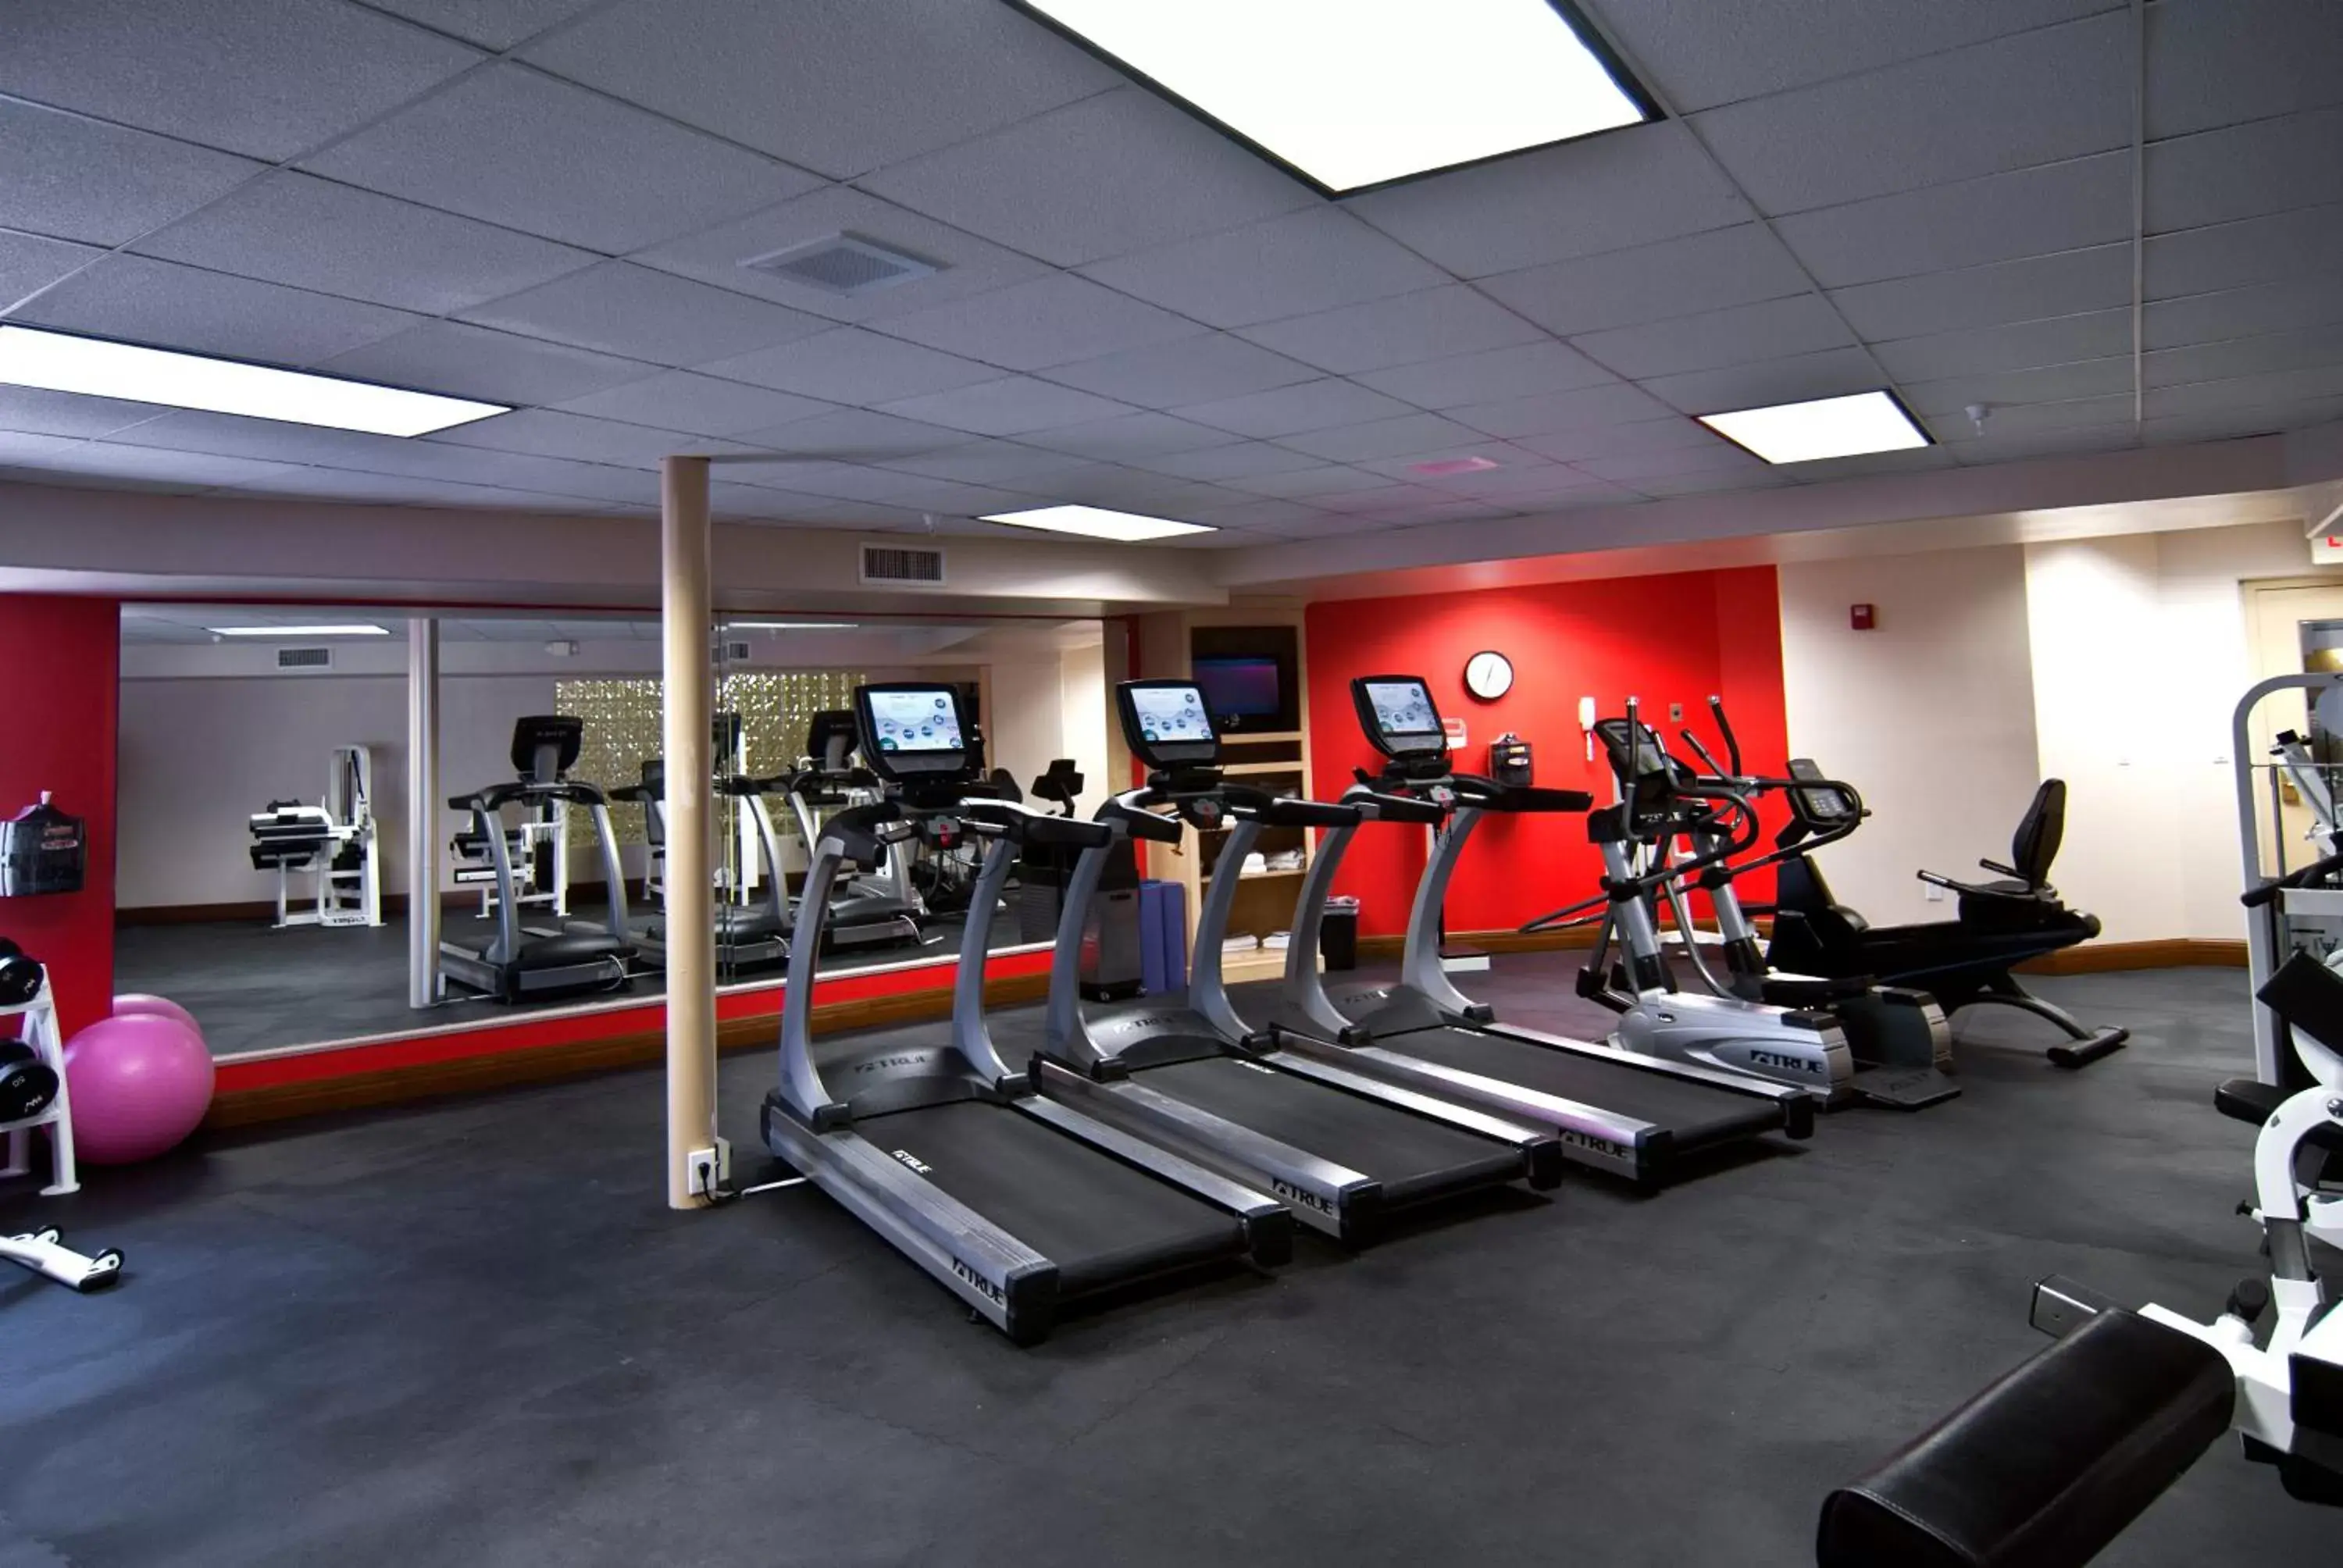 Fitness centre/facilities, Fitness Center/Facilities in Radisson Hotel El Paso Airport